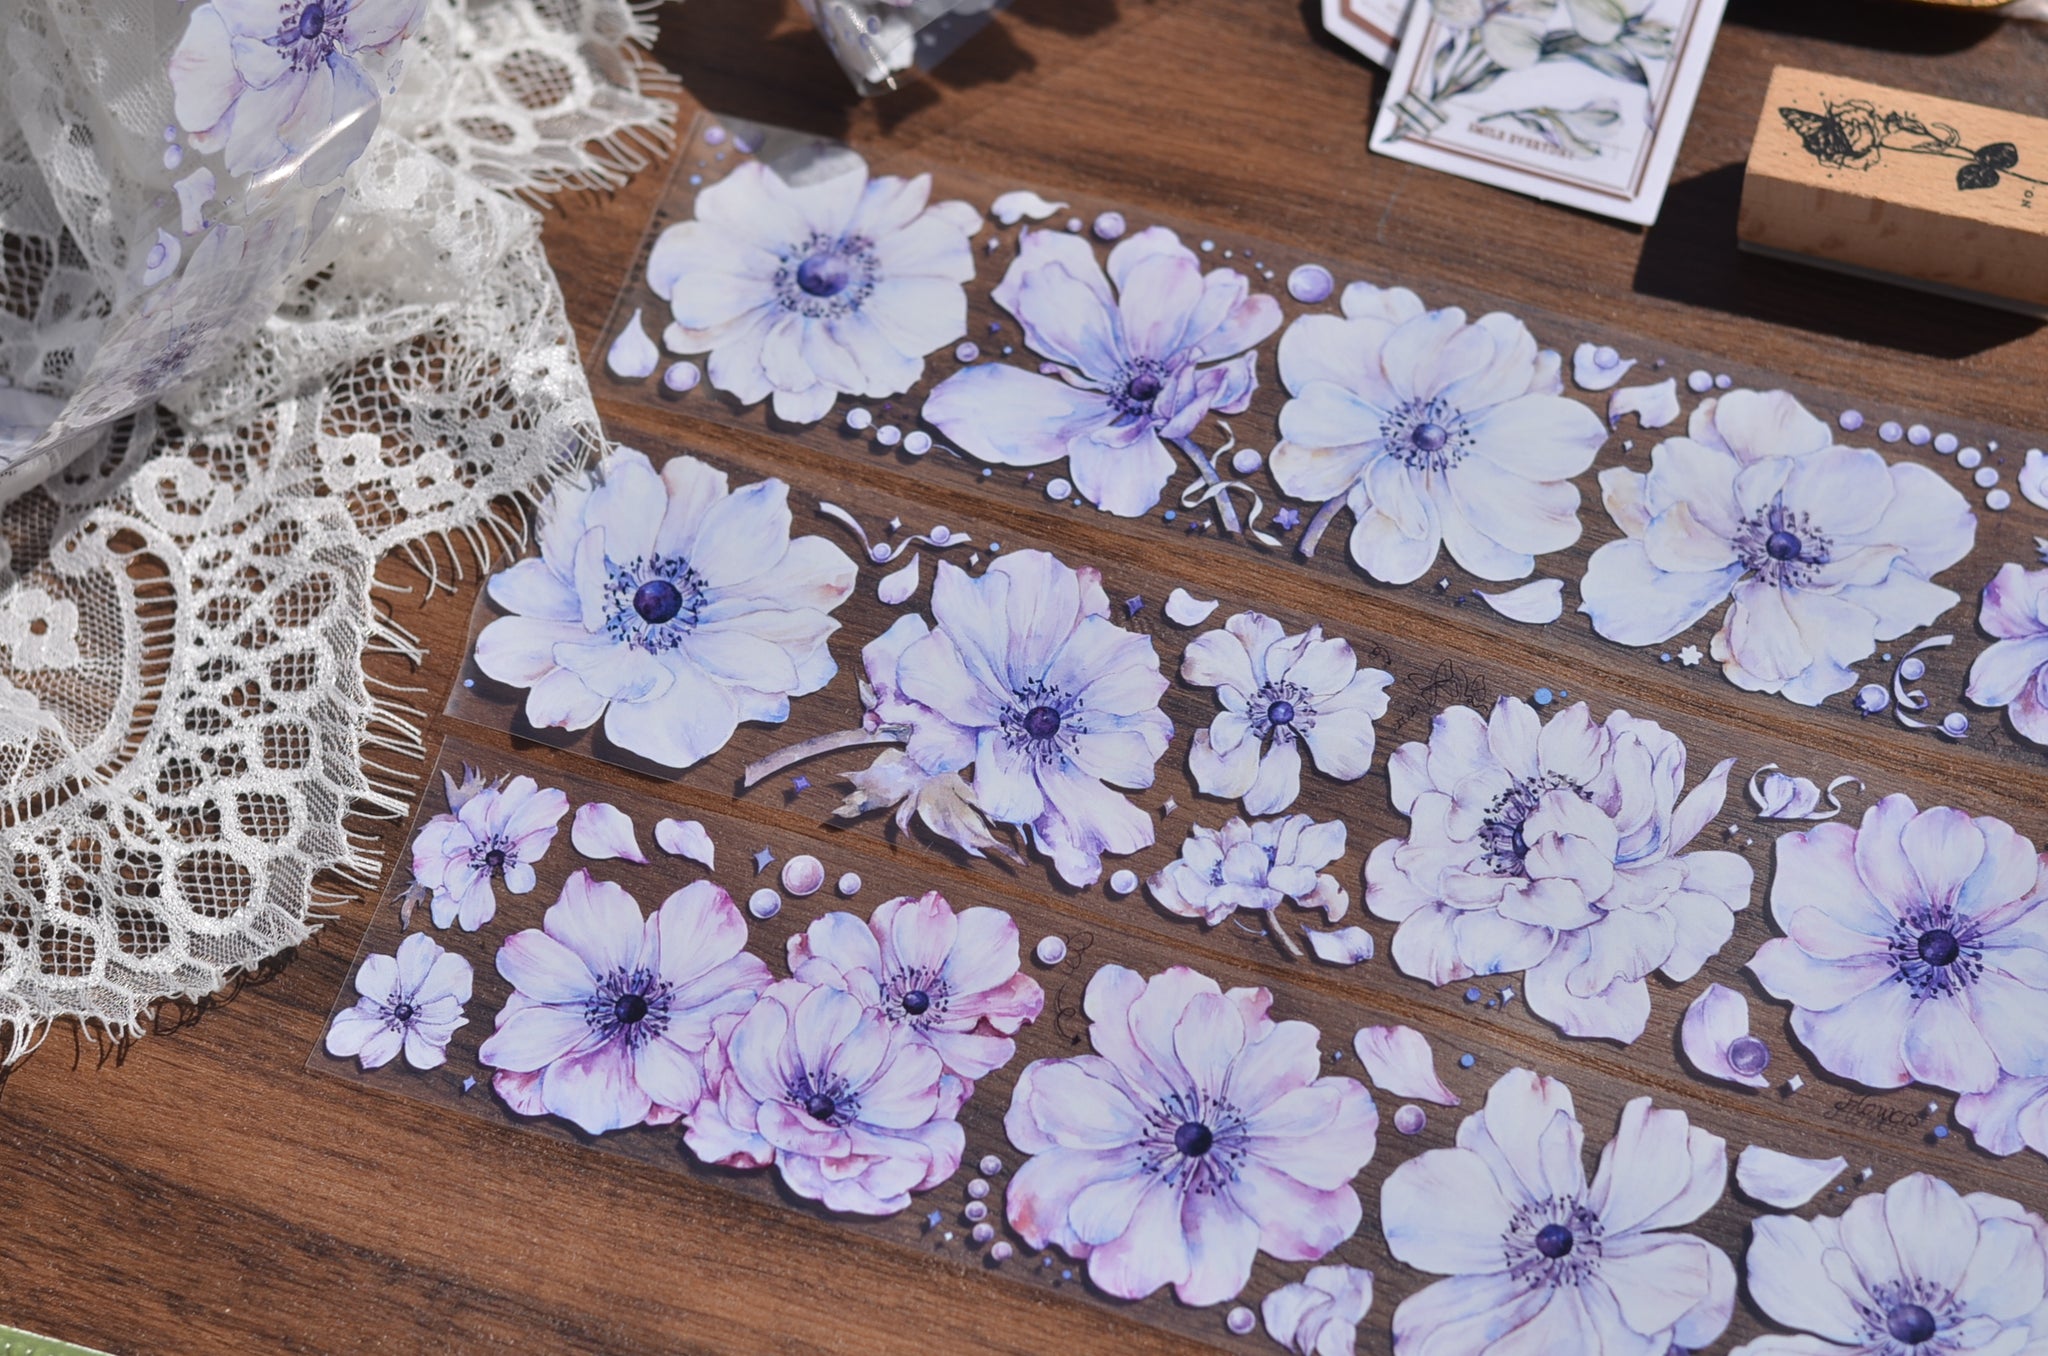 Xiaobai's House Masking Tape: Purple Anemone